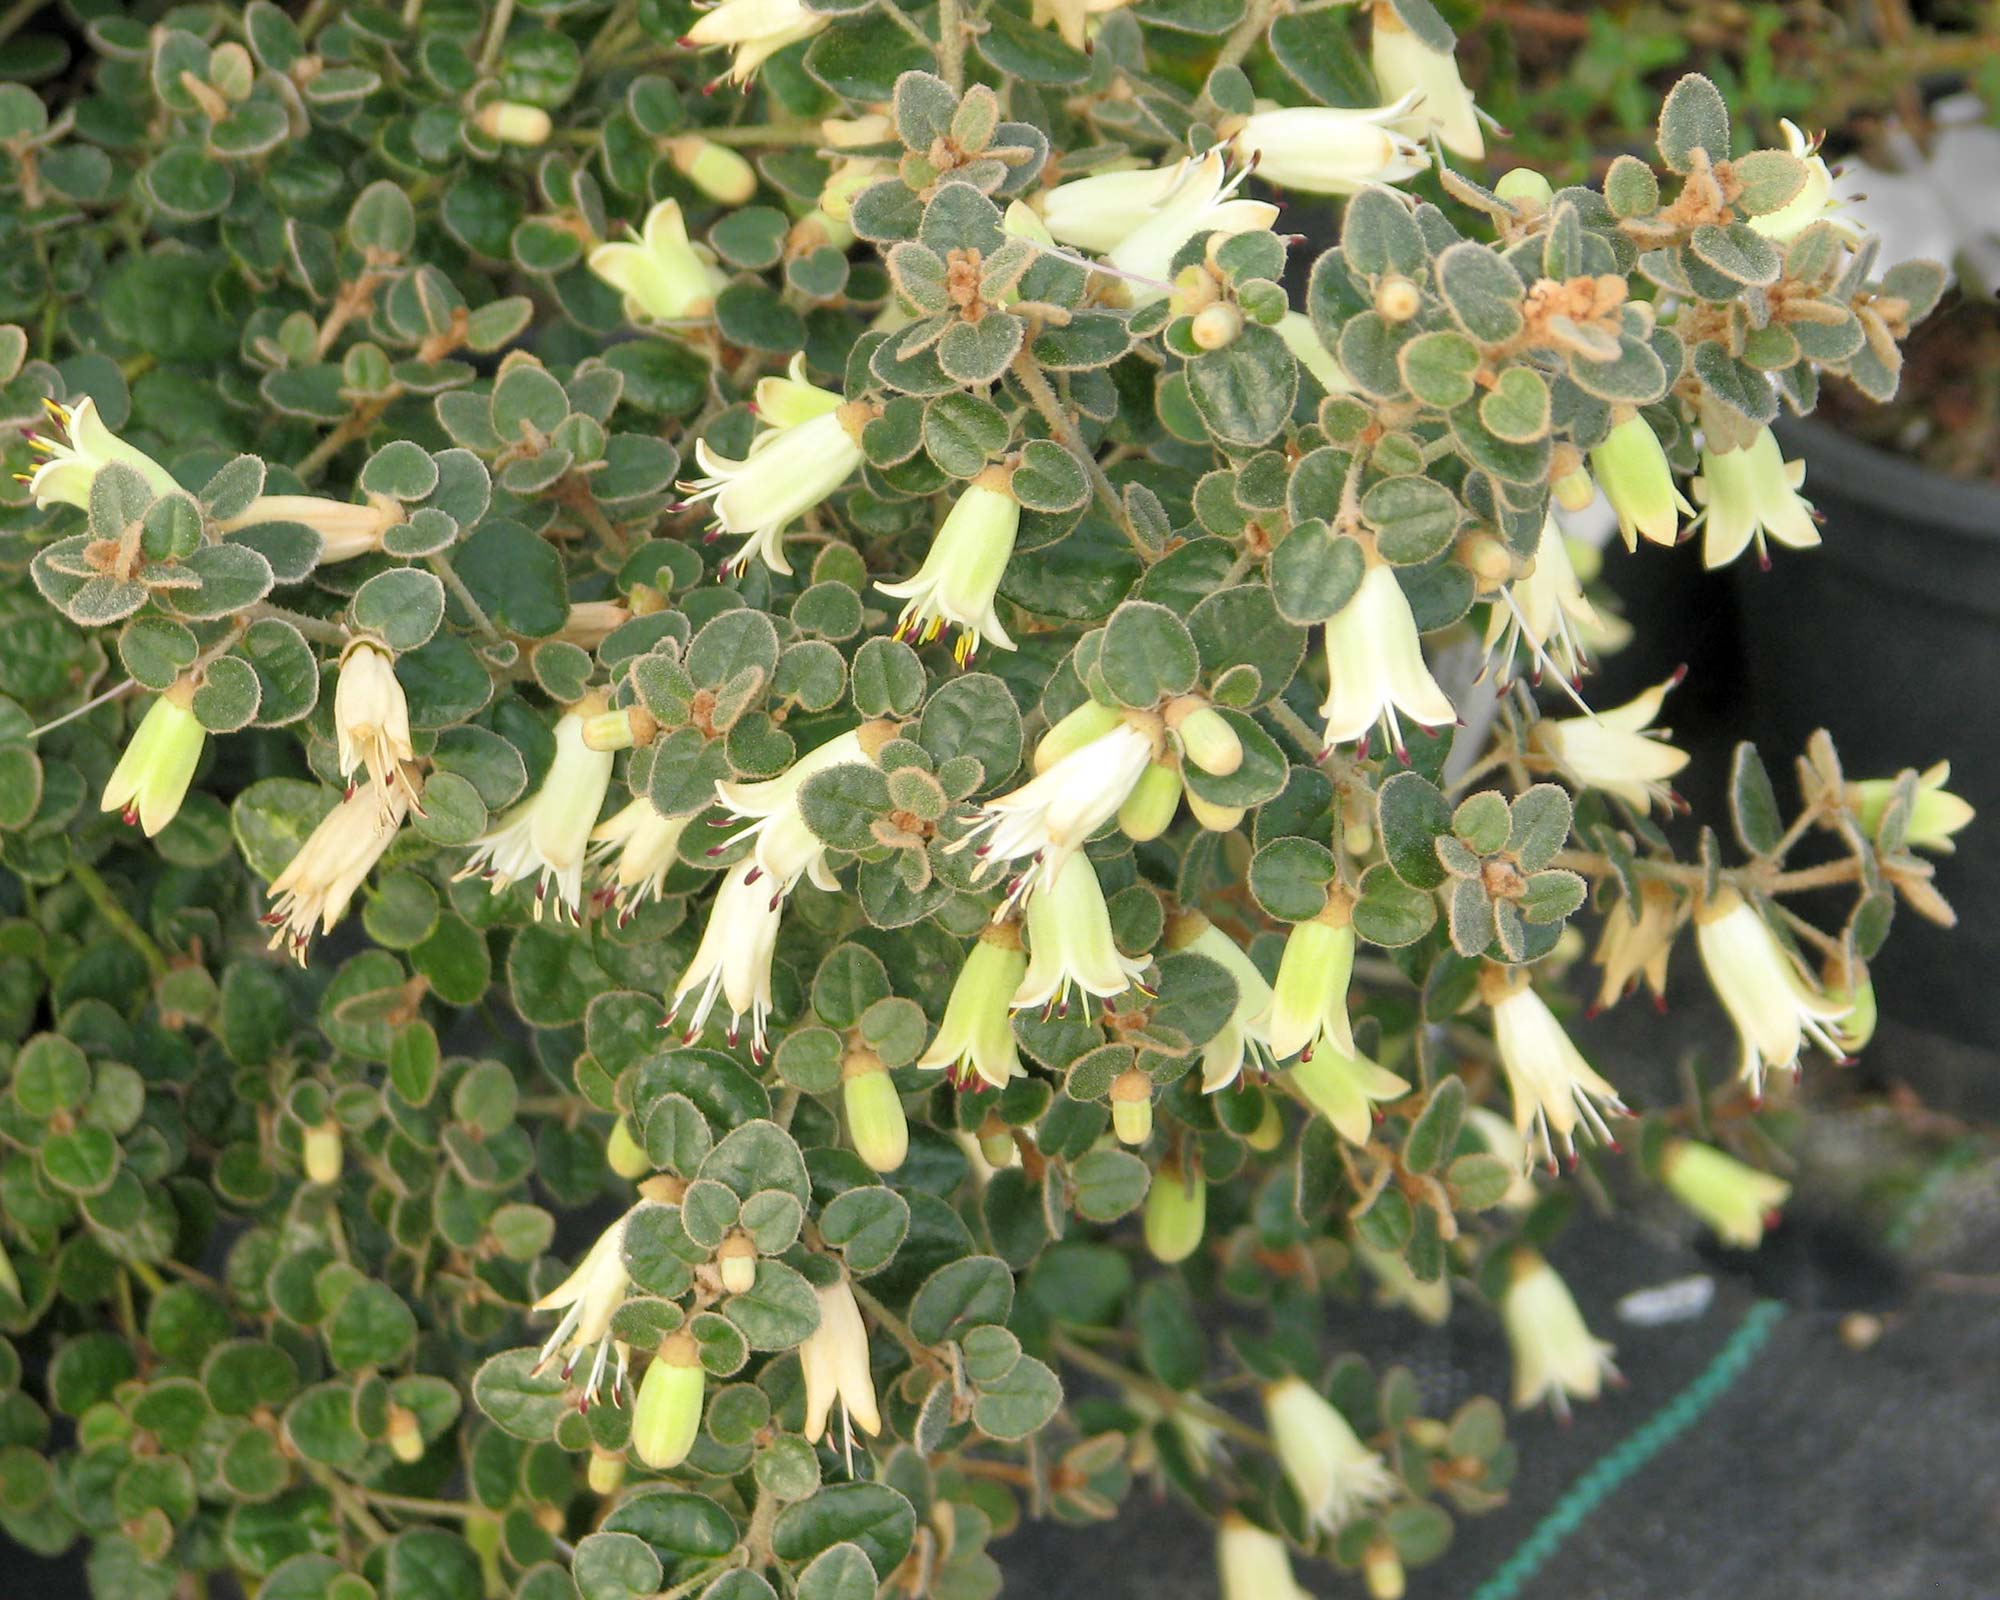 Correa reflexa nummulariifolia - cream bell shaped flowers - photo peganum